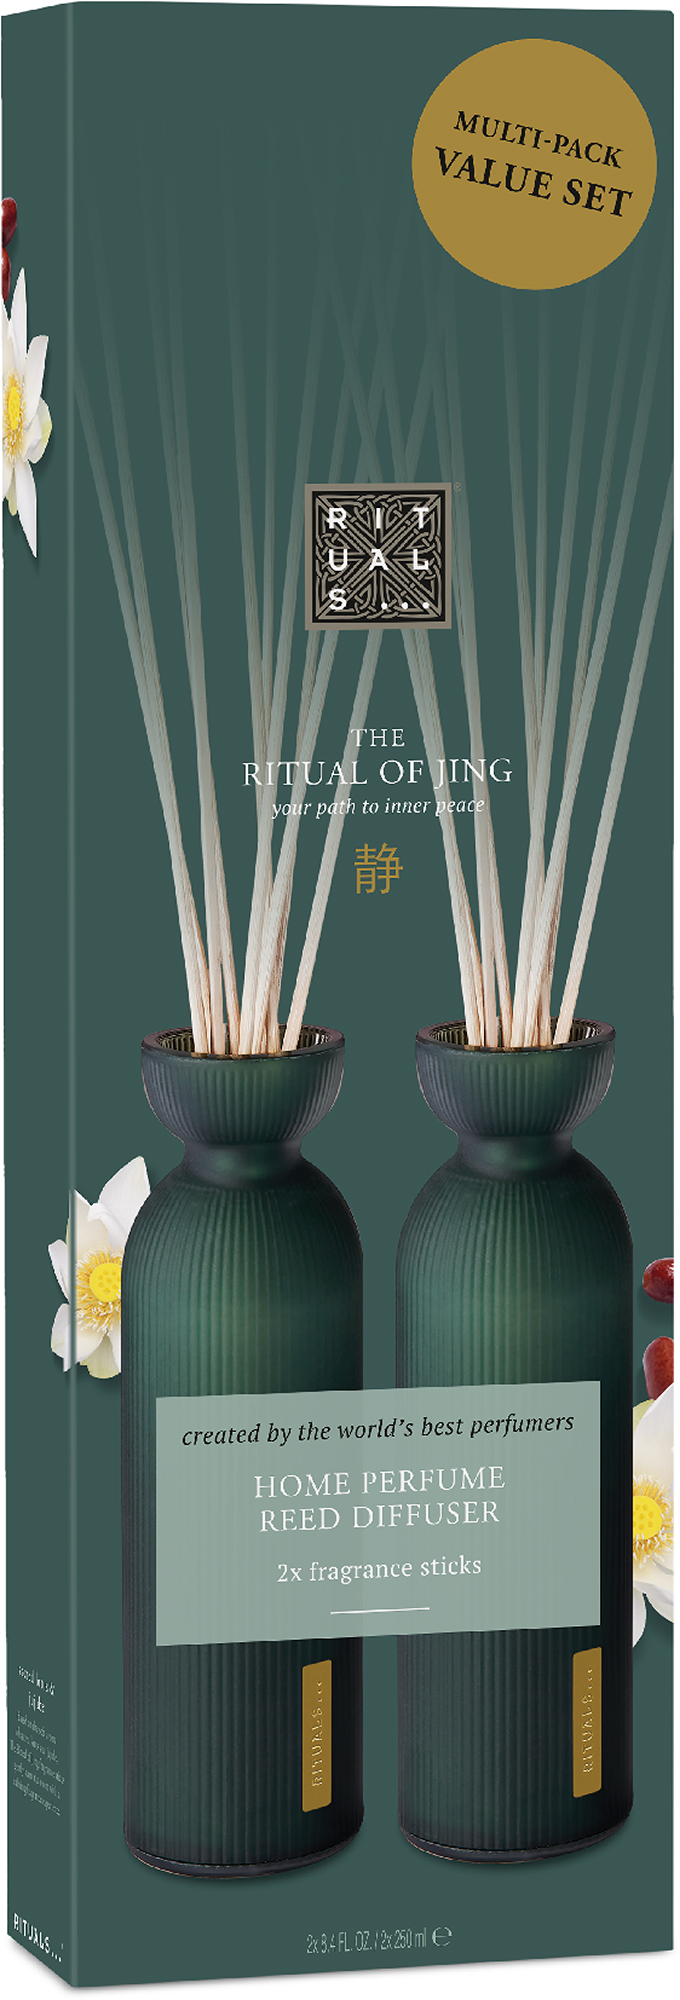 Rituals The Ritual of Jing Home Fragrance Fragrance Sticks Duo 2x250 ml